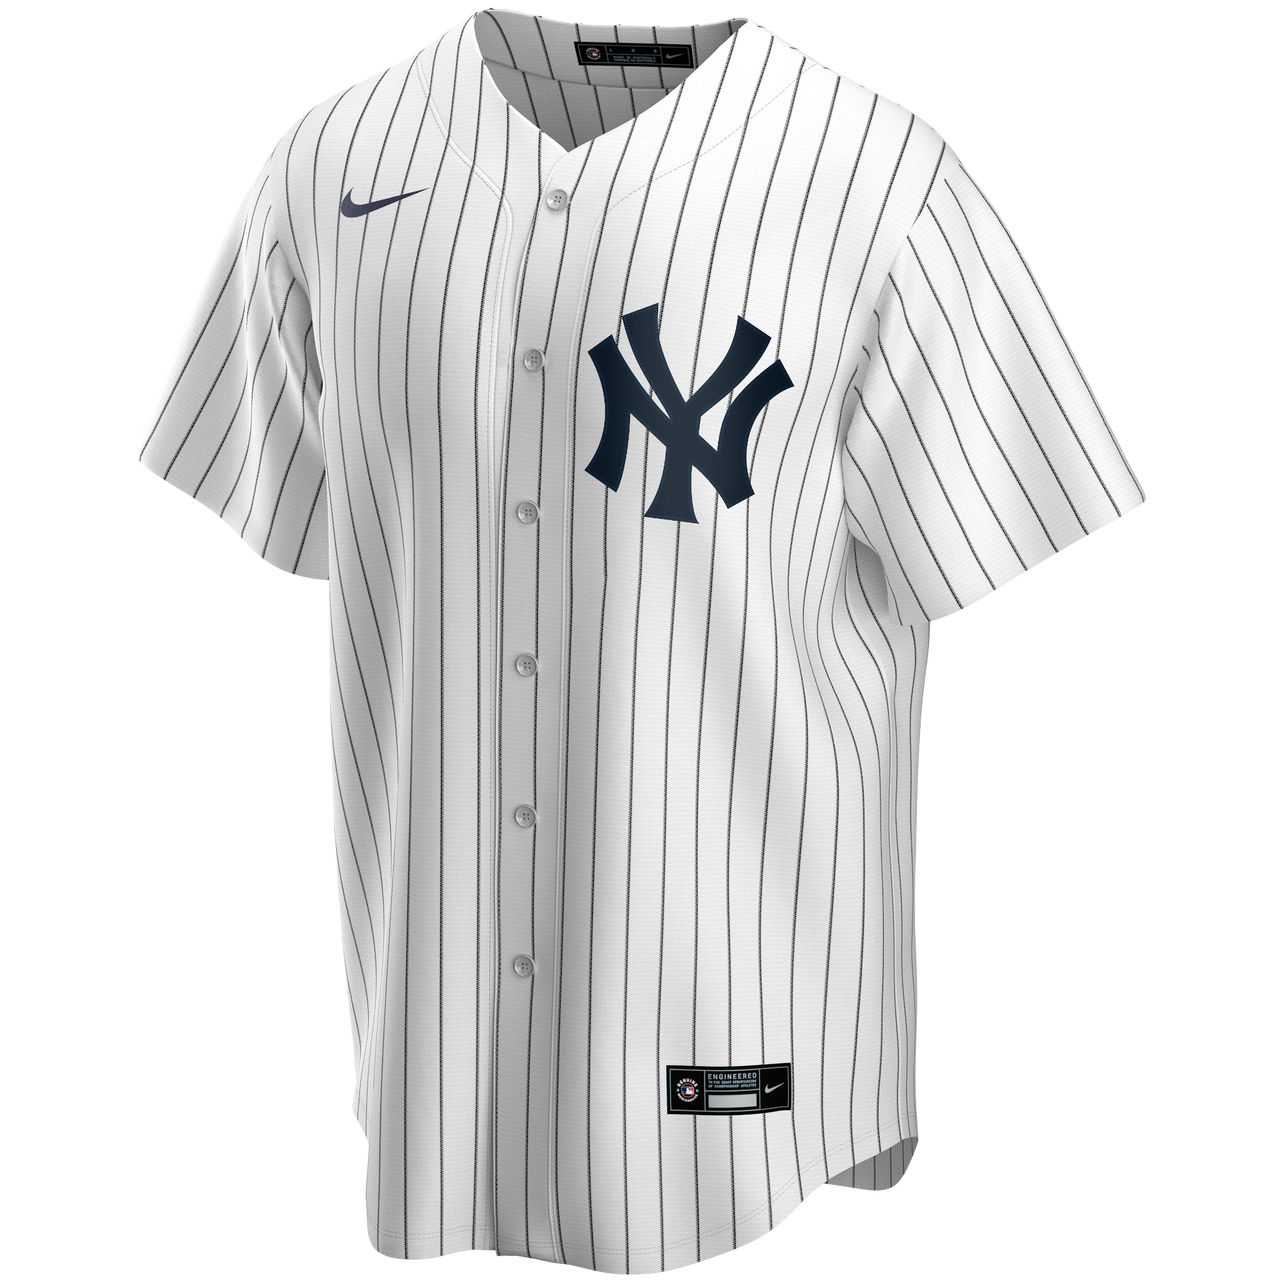 New York Yankees Mattingly Jersey